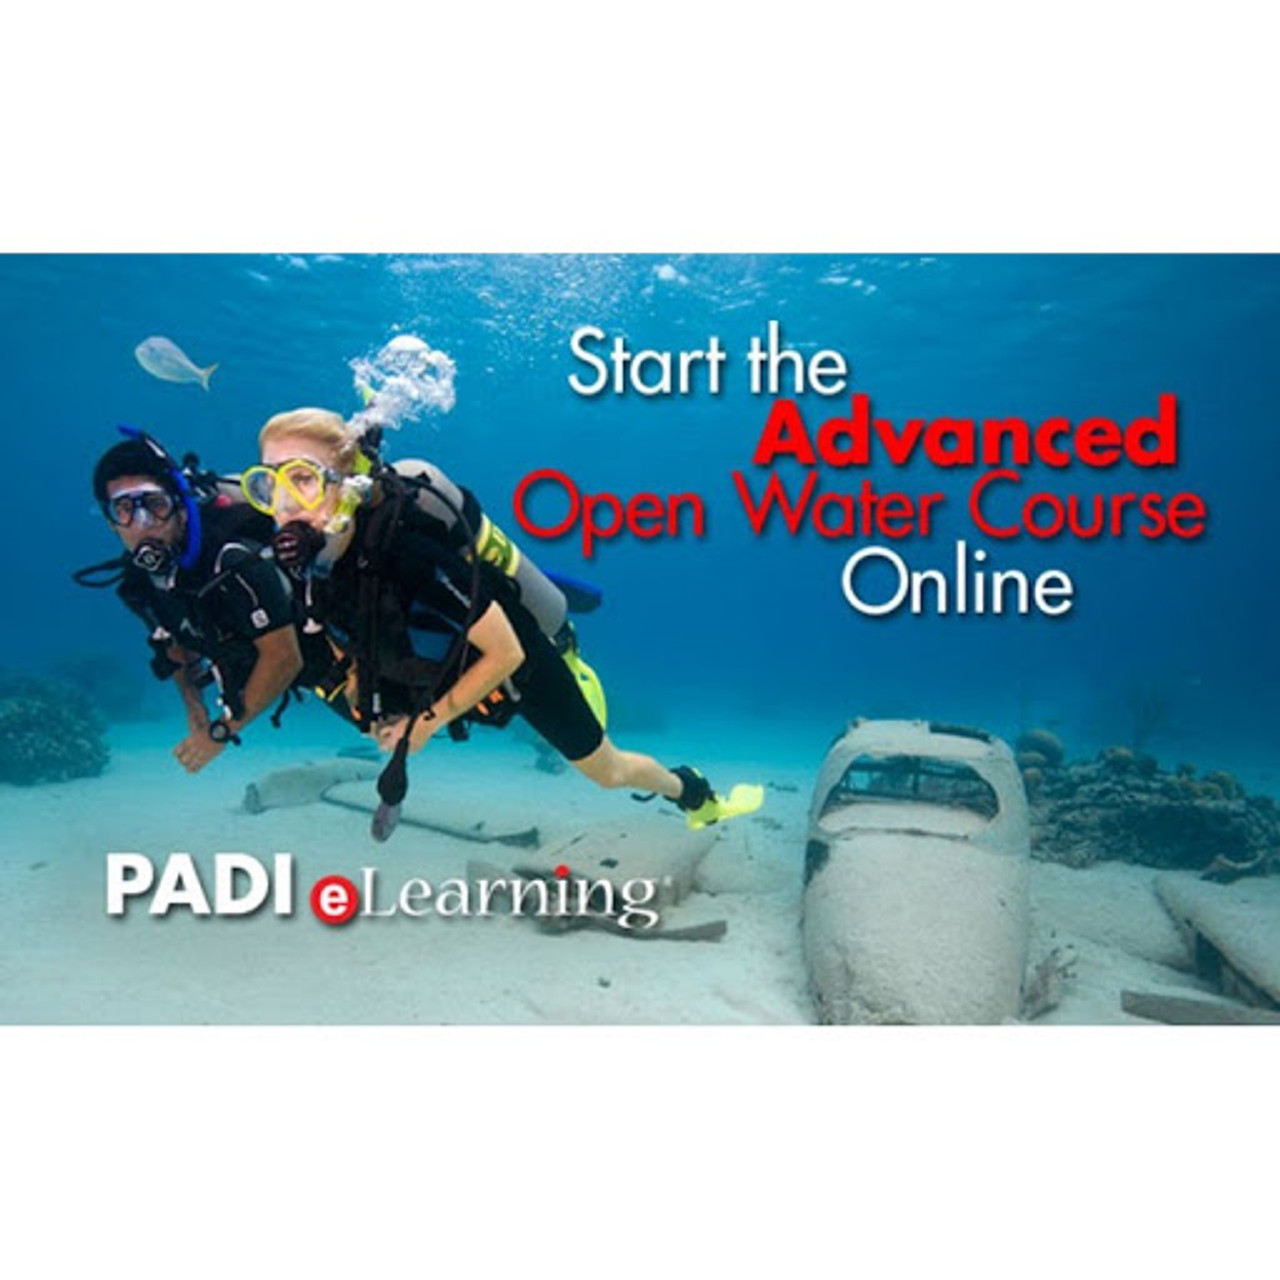 padi open water online